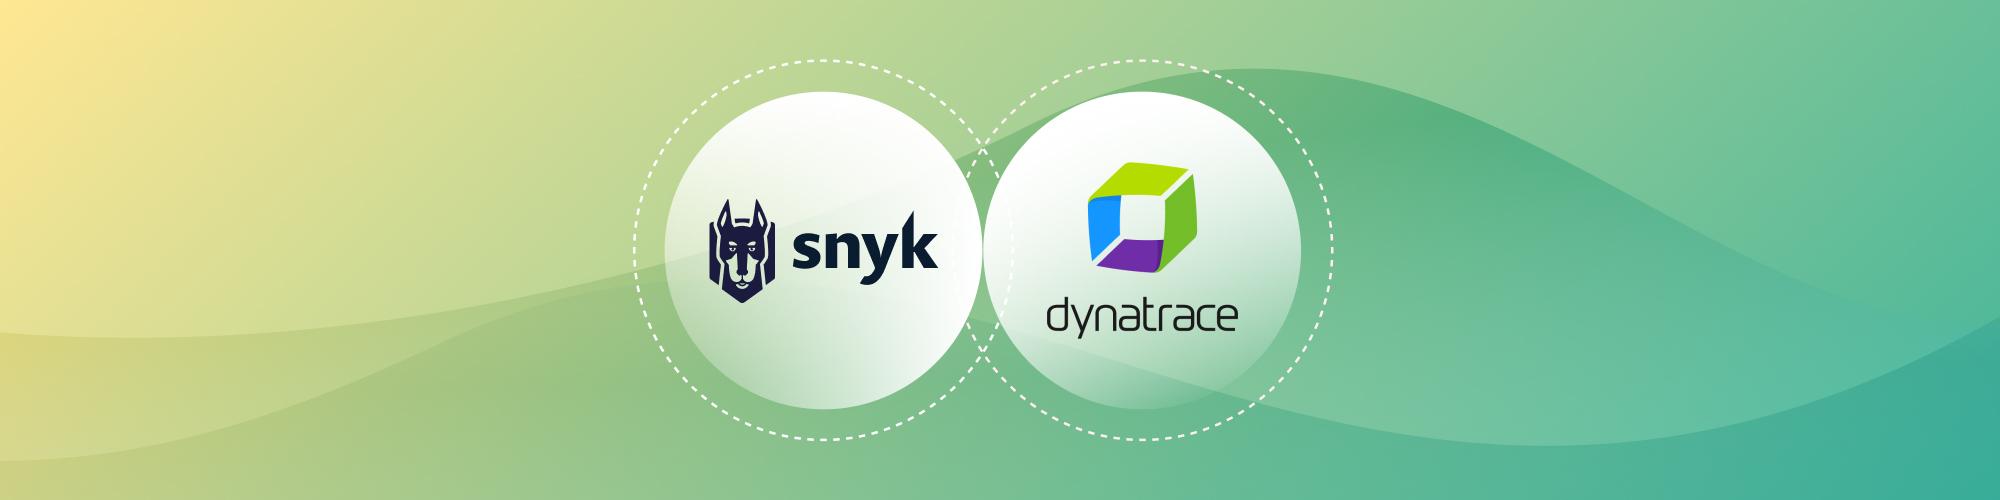 wordpress-sync/banner-green-snyk-dynatrace